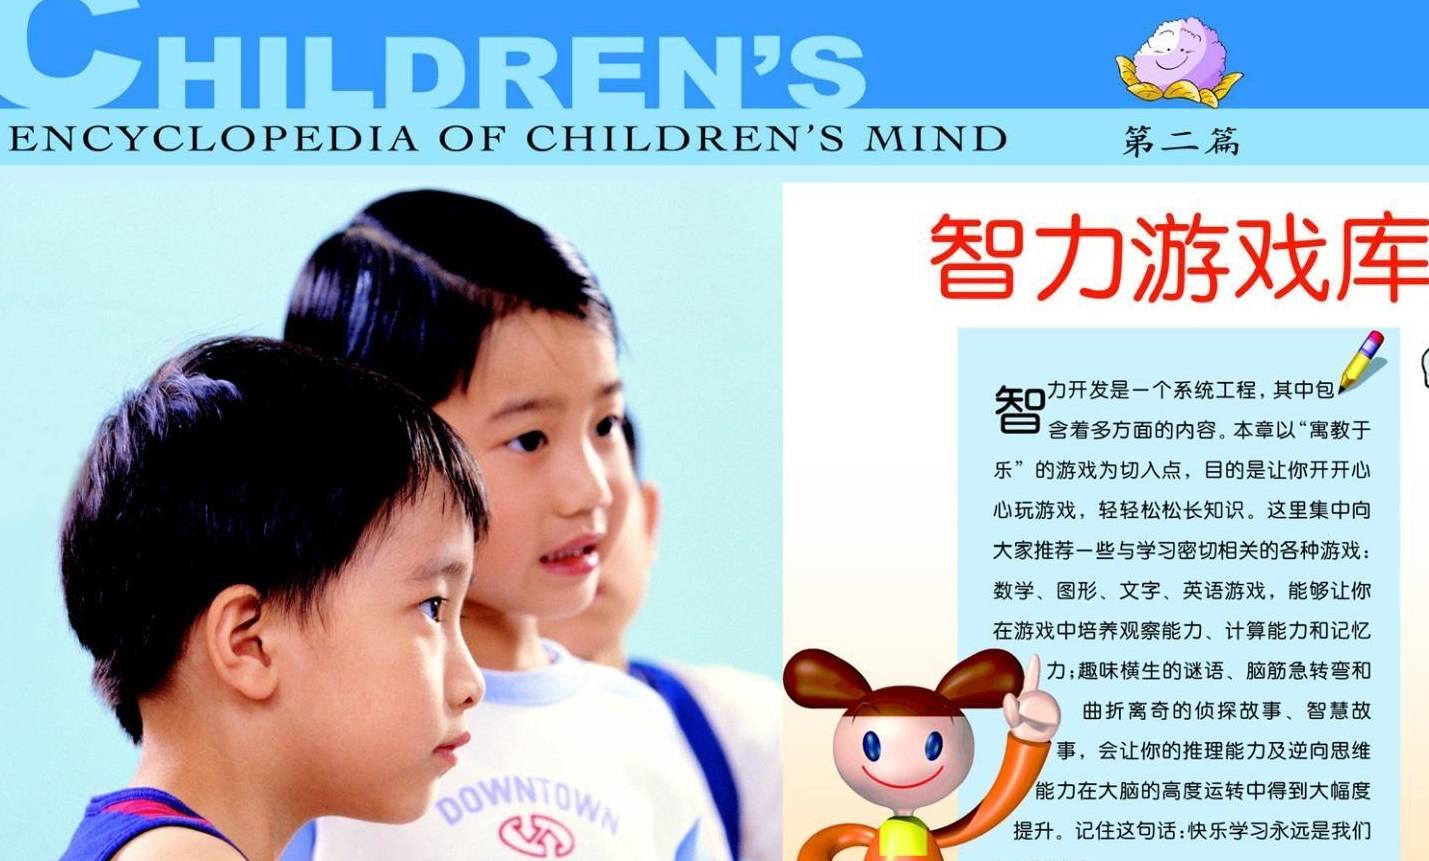 ps苹果版如何拼图:推荐一本宝藏书籍：中国少年儿童智力开发百科全书-第62张图片-太平洋在线下载